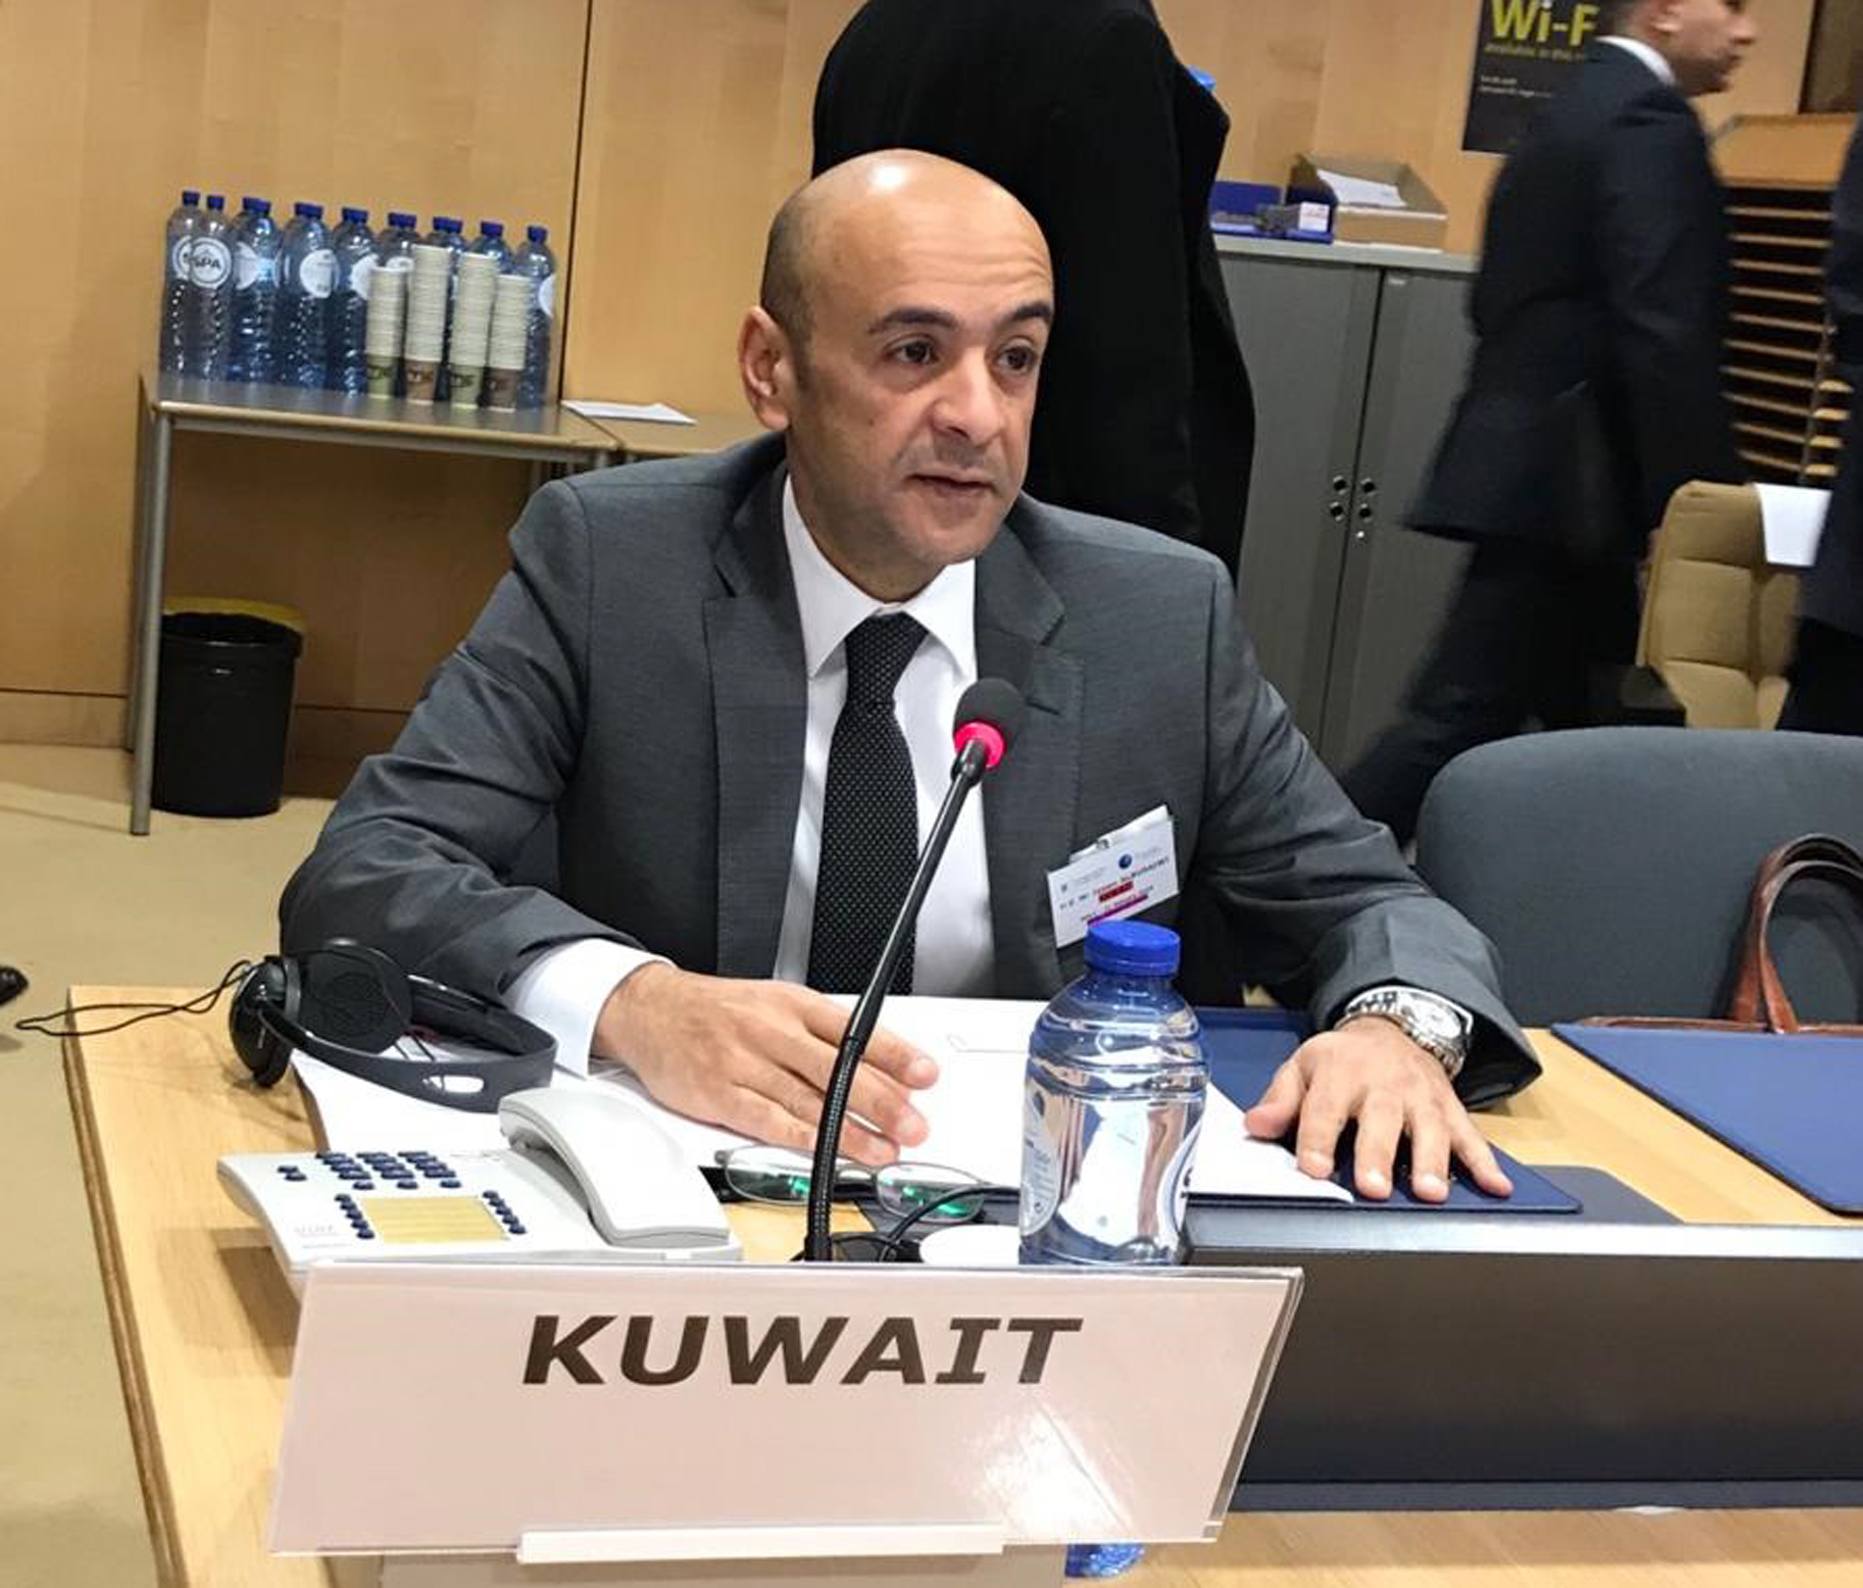 Kuwait’s ambassador to the EU, Belgium, NATO and Luxembourg, Jasem Al-Budaiwi